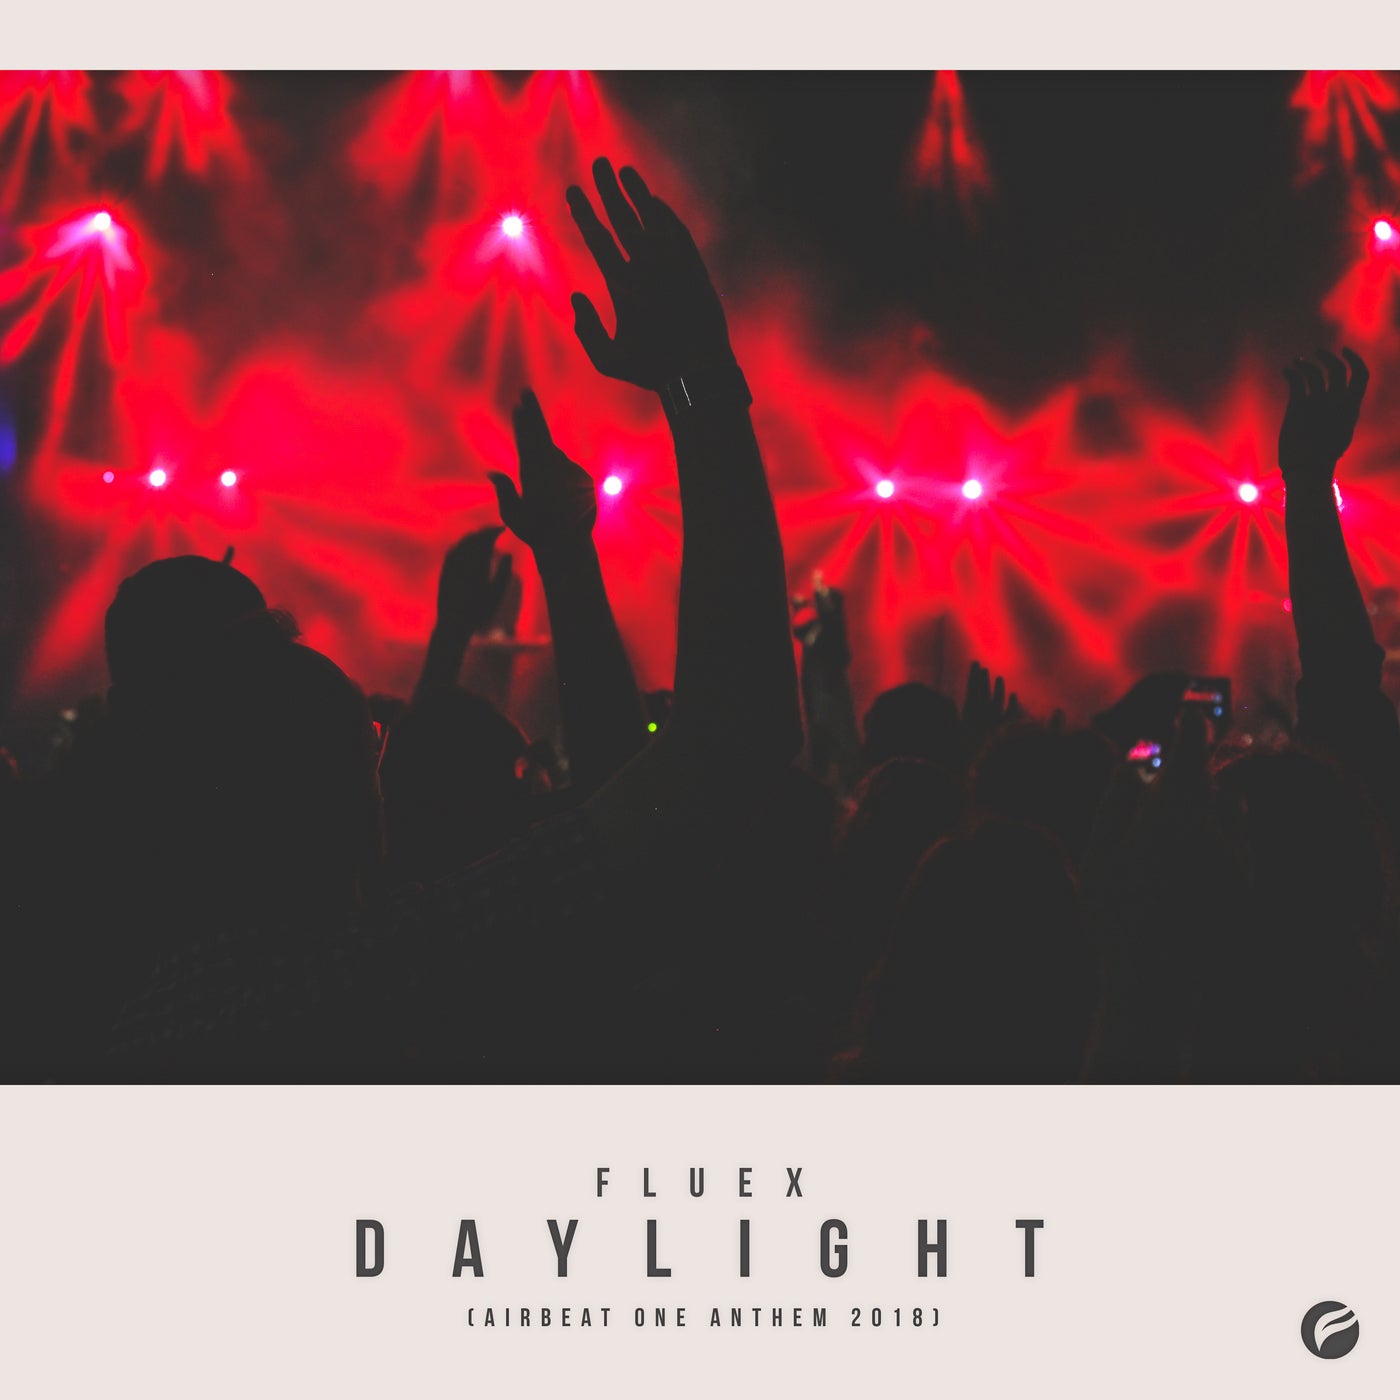 Daylight (Airbeat One Anthem 2018)